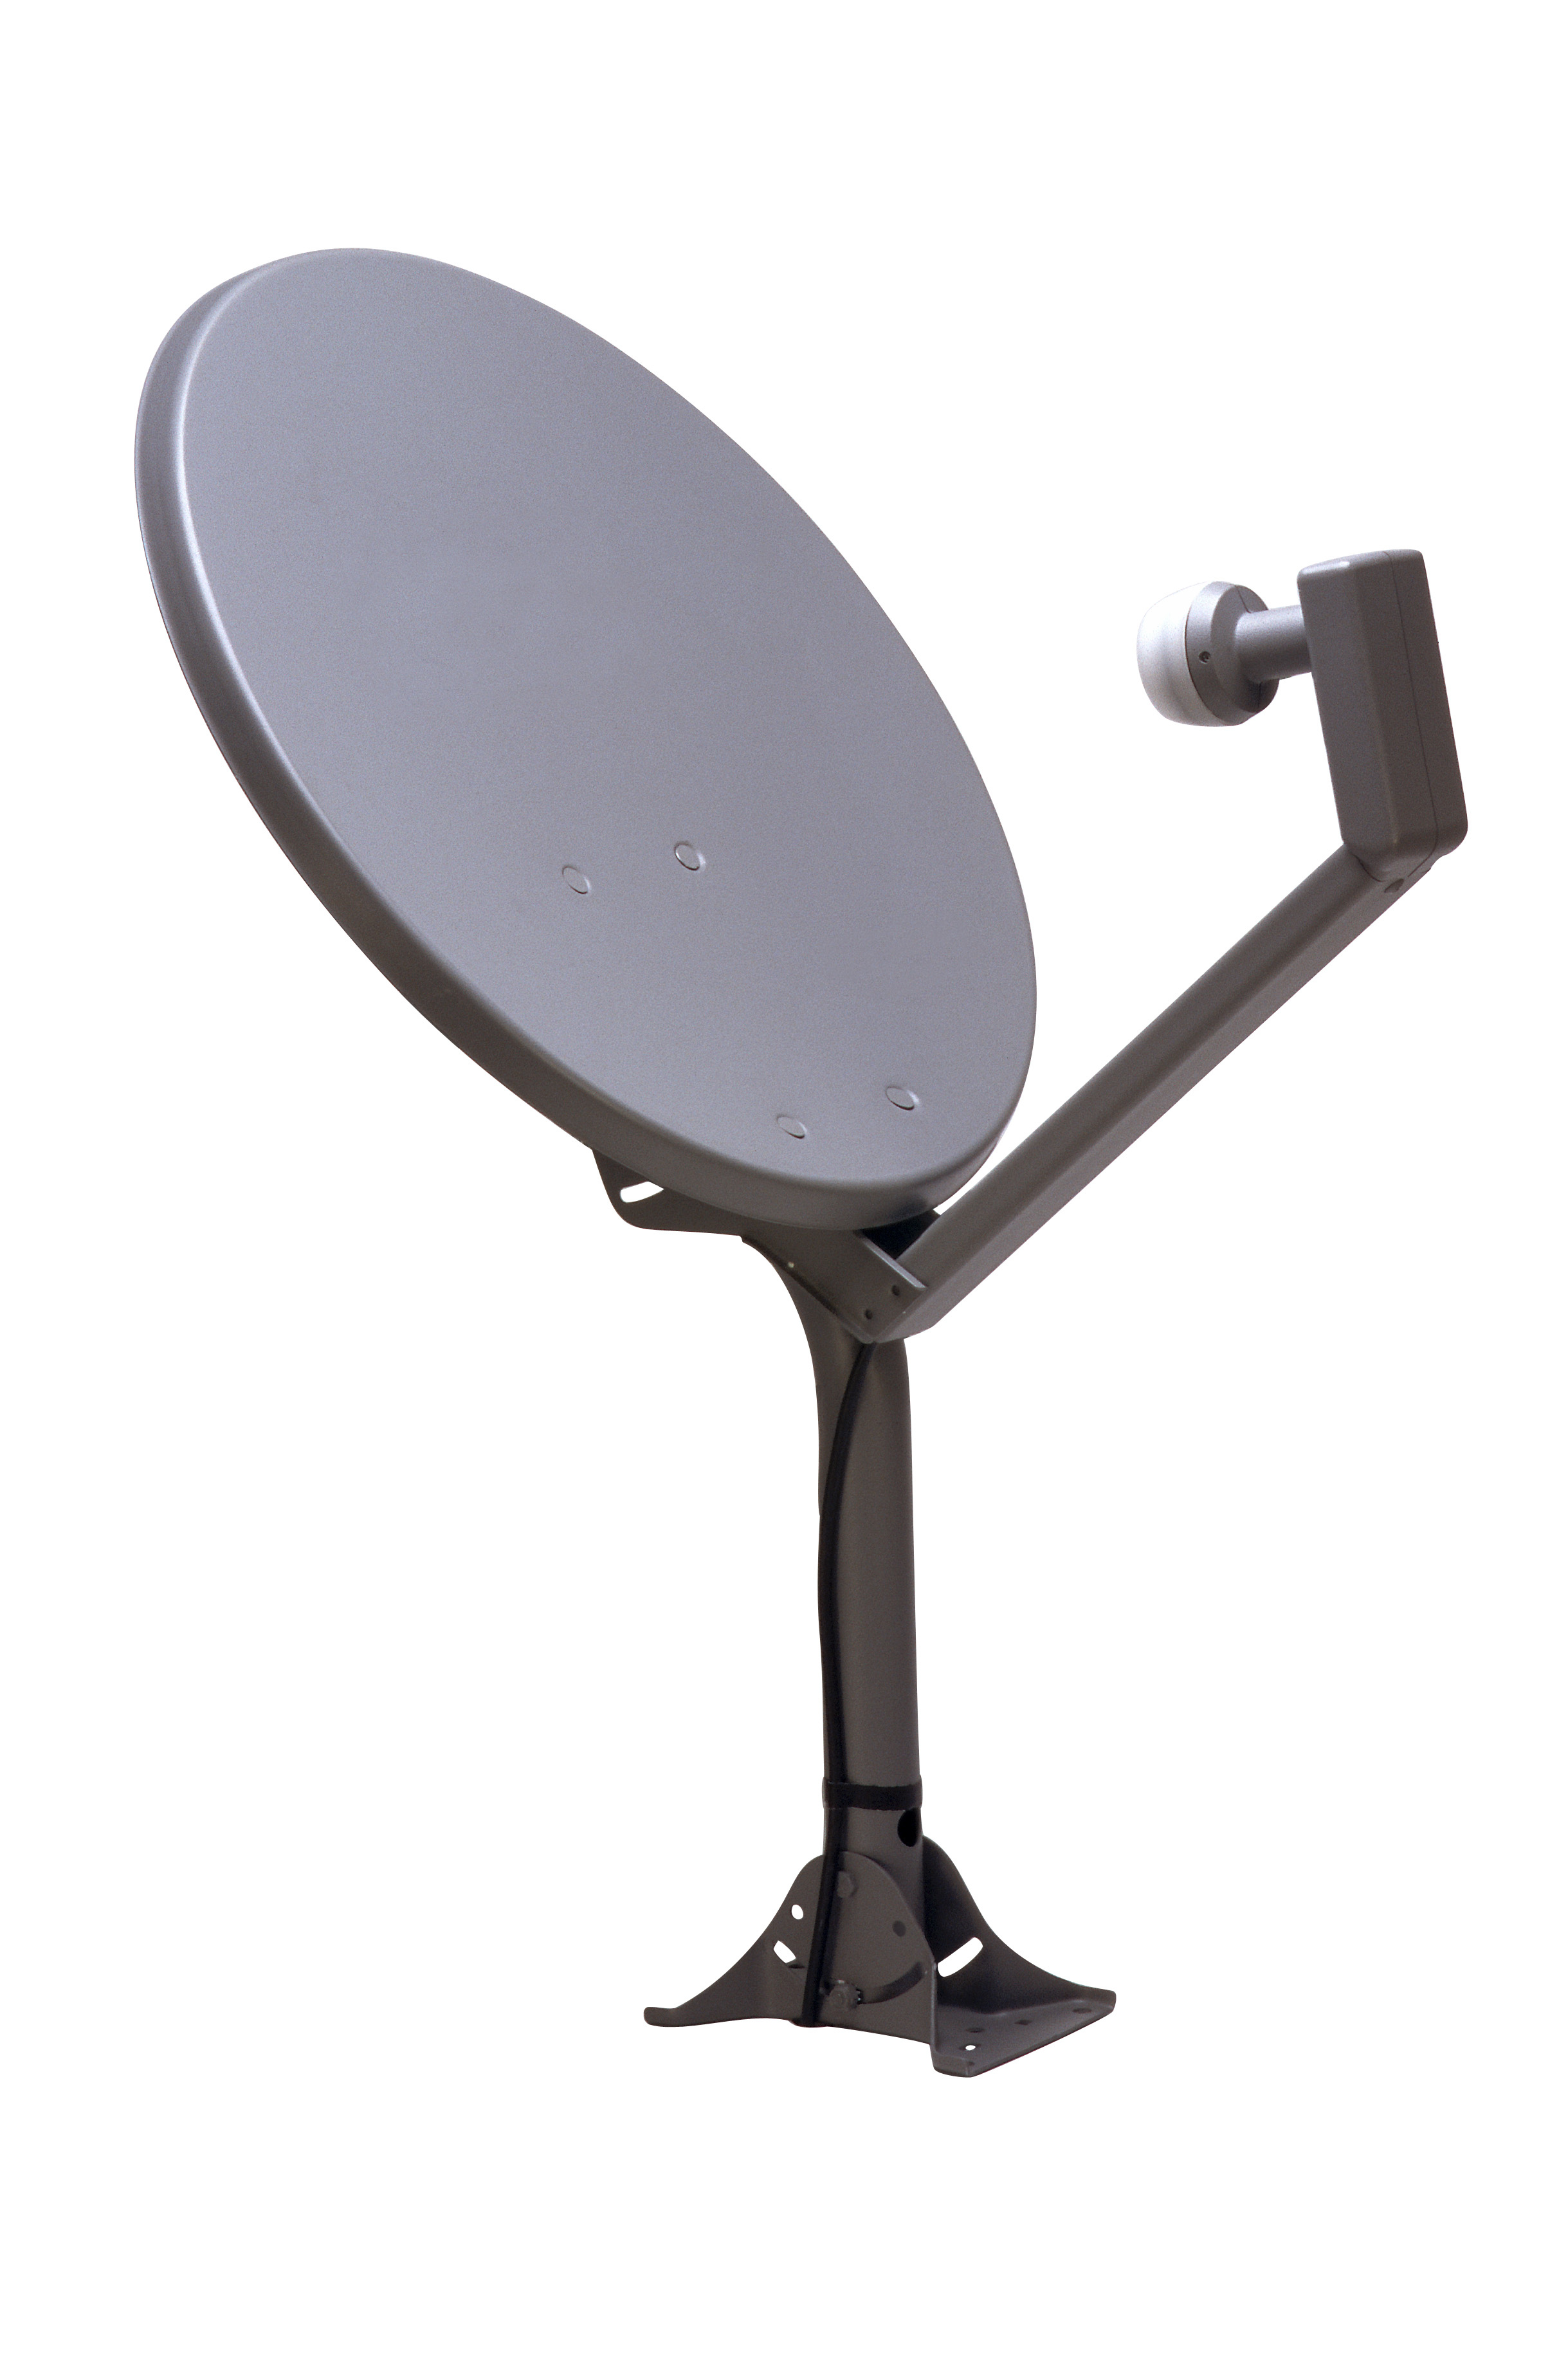 Satellite dish. Спутниковая антенна. Спутниковая тарелка. Параболическая антенна. Прозрачная спутниковая антенна.